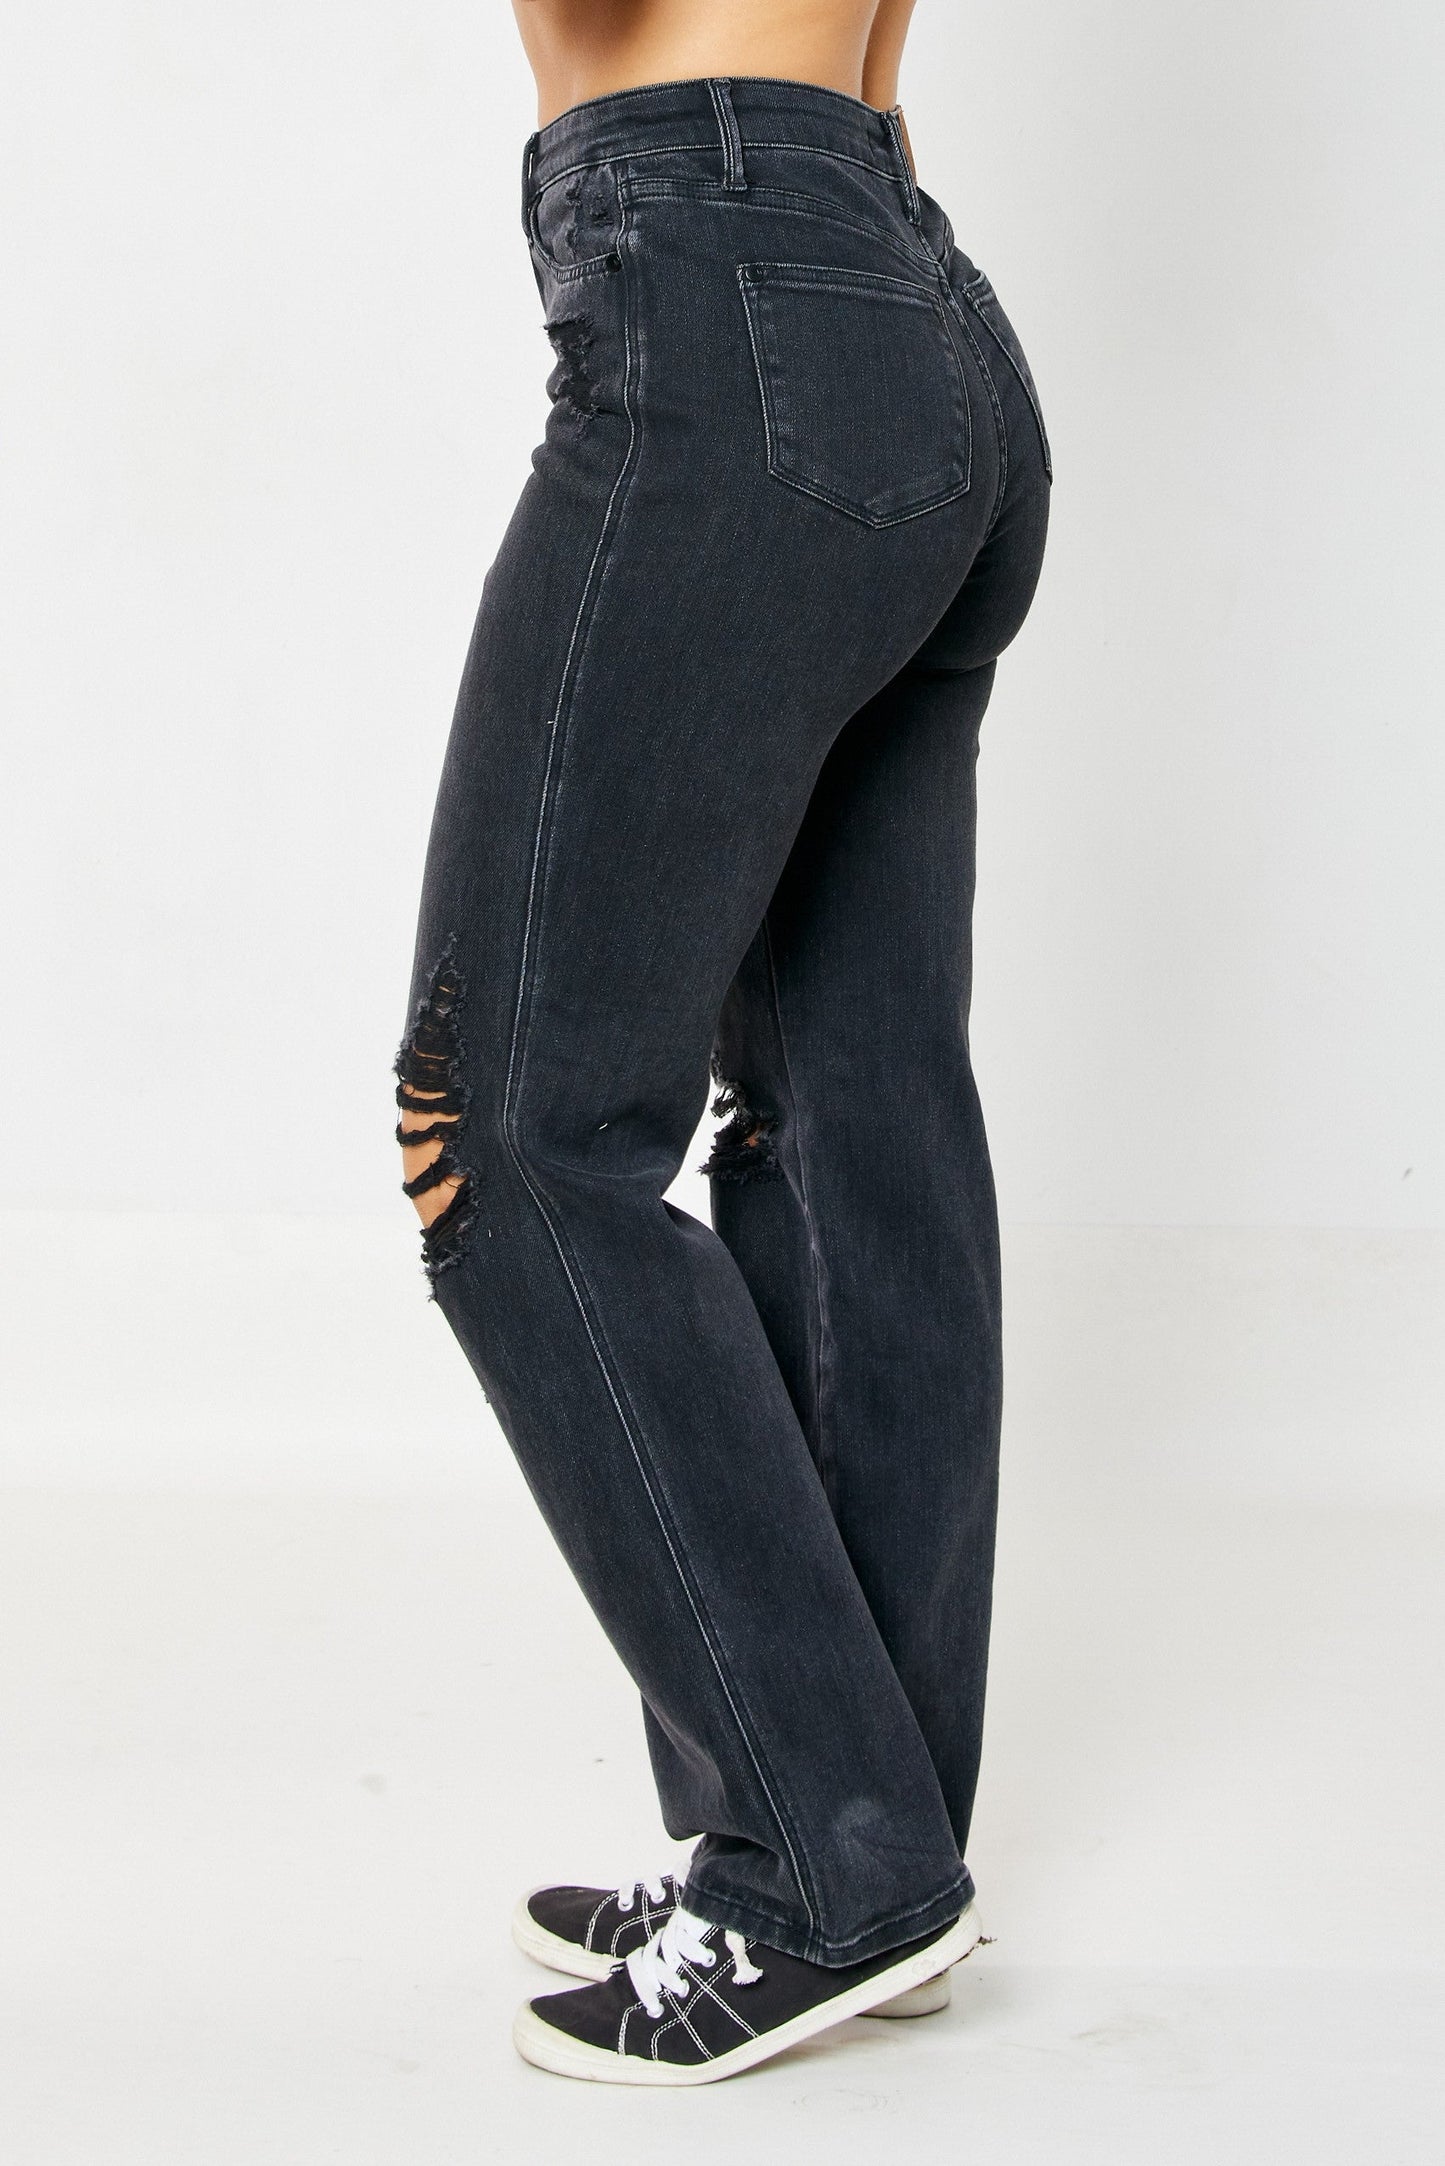 High Waist Rigid 90s Style Black Denim Jeans by Judy Blue